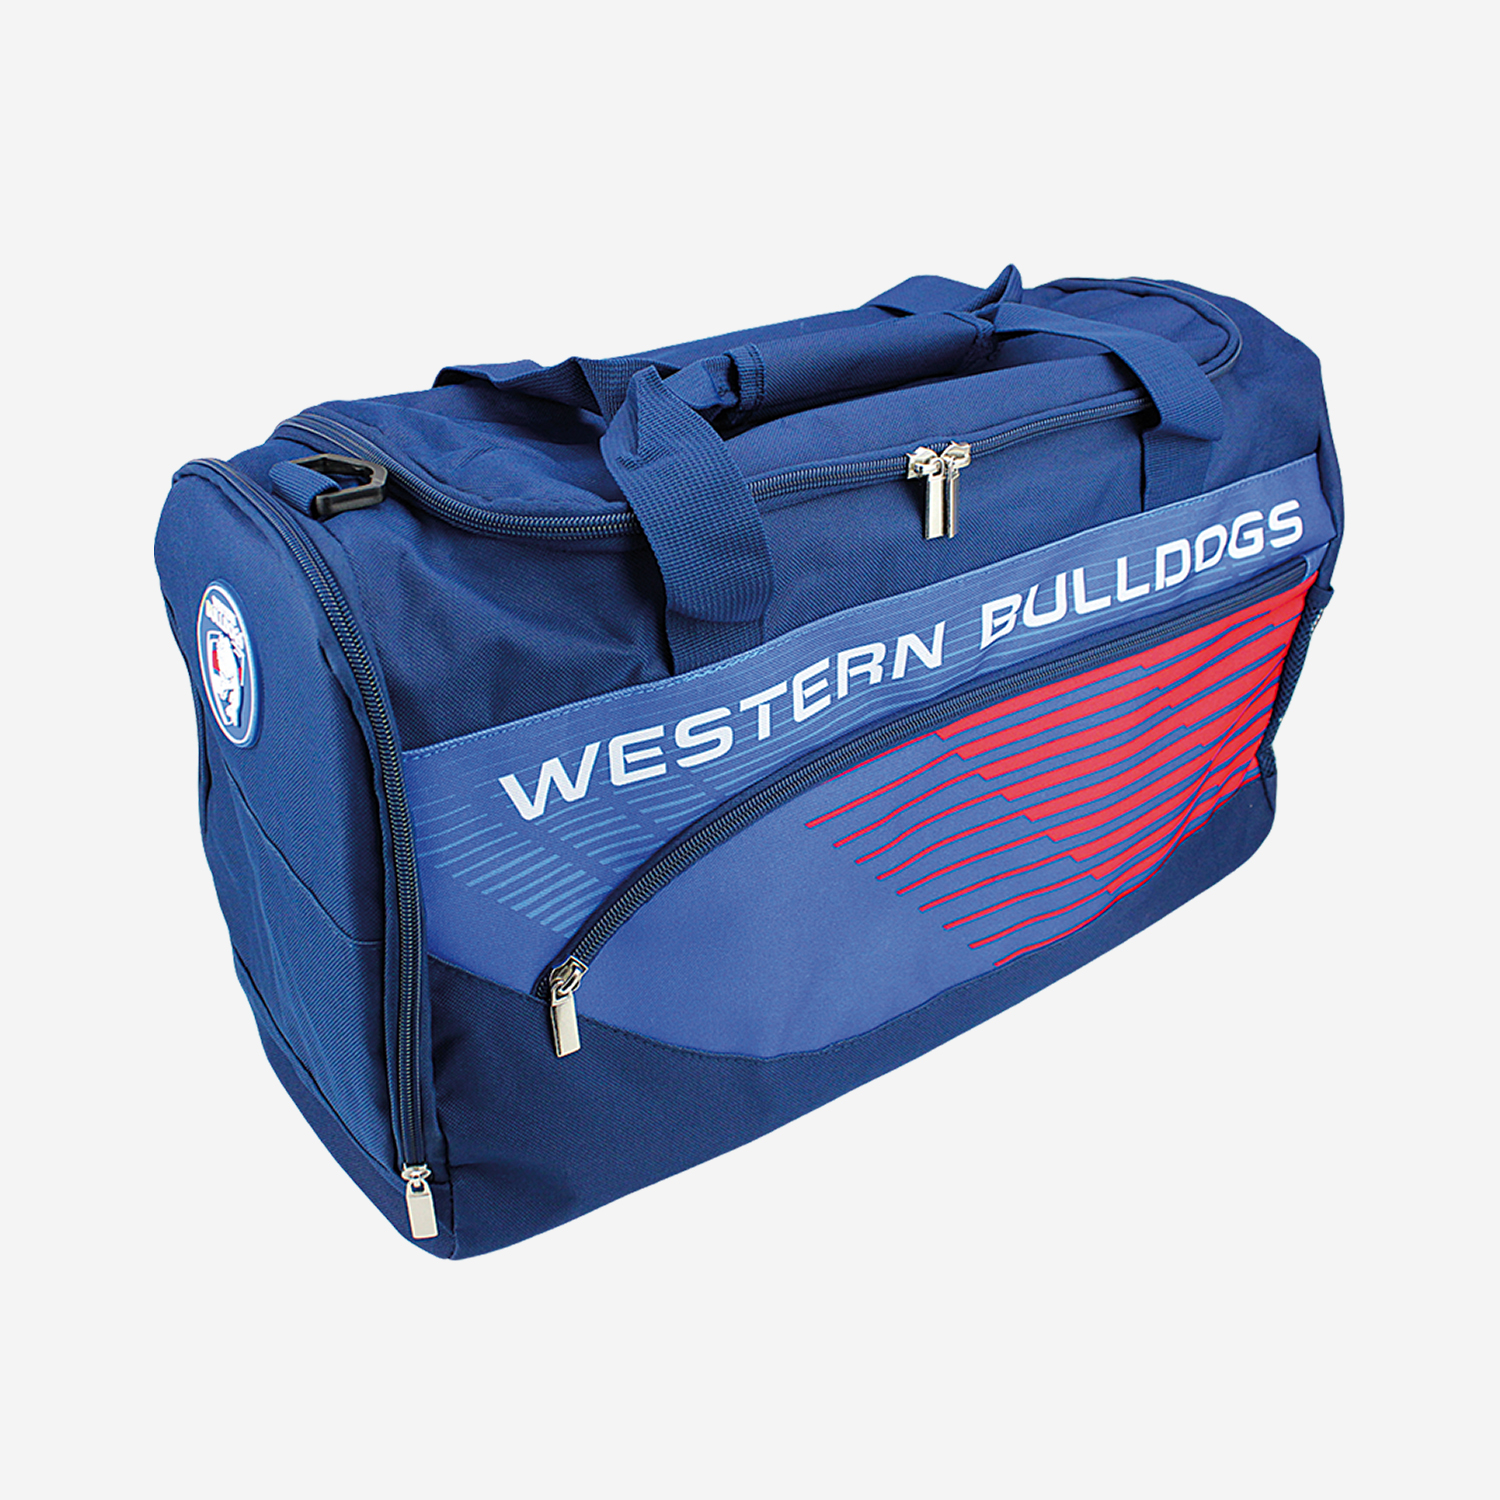 Western Bulldogs Bag